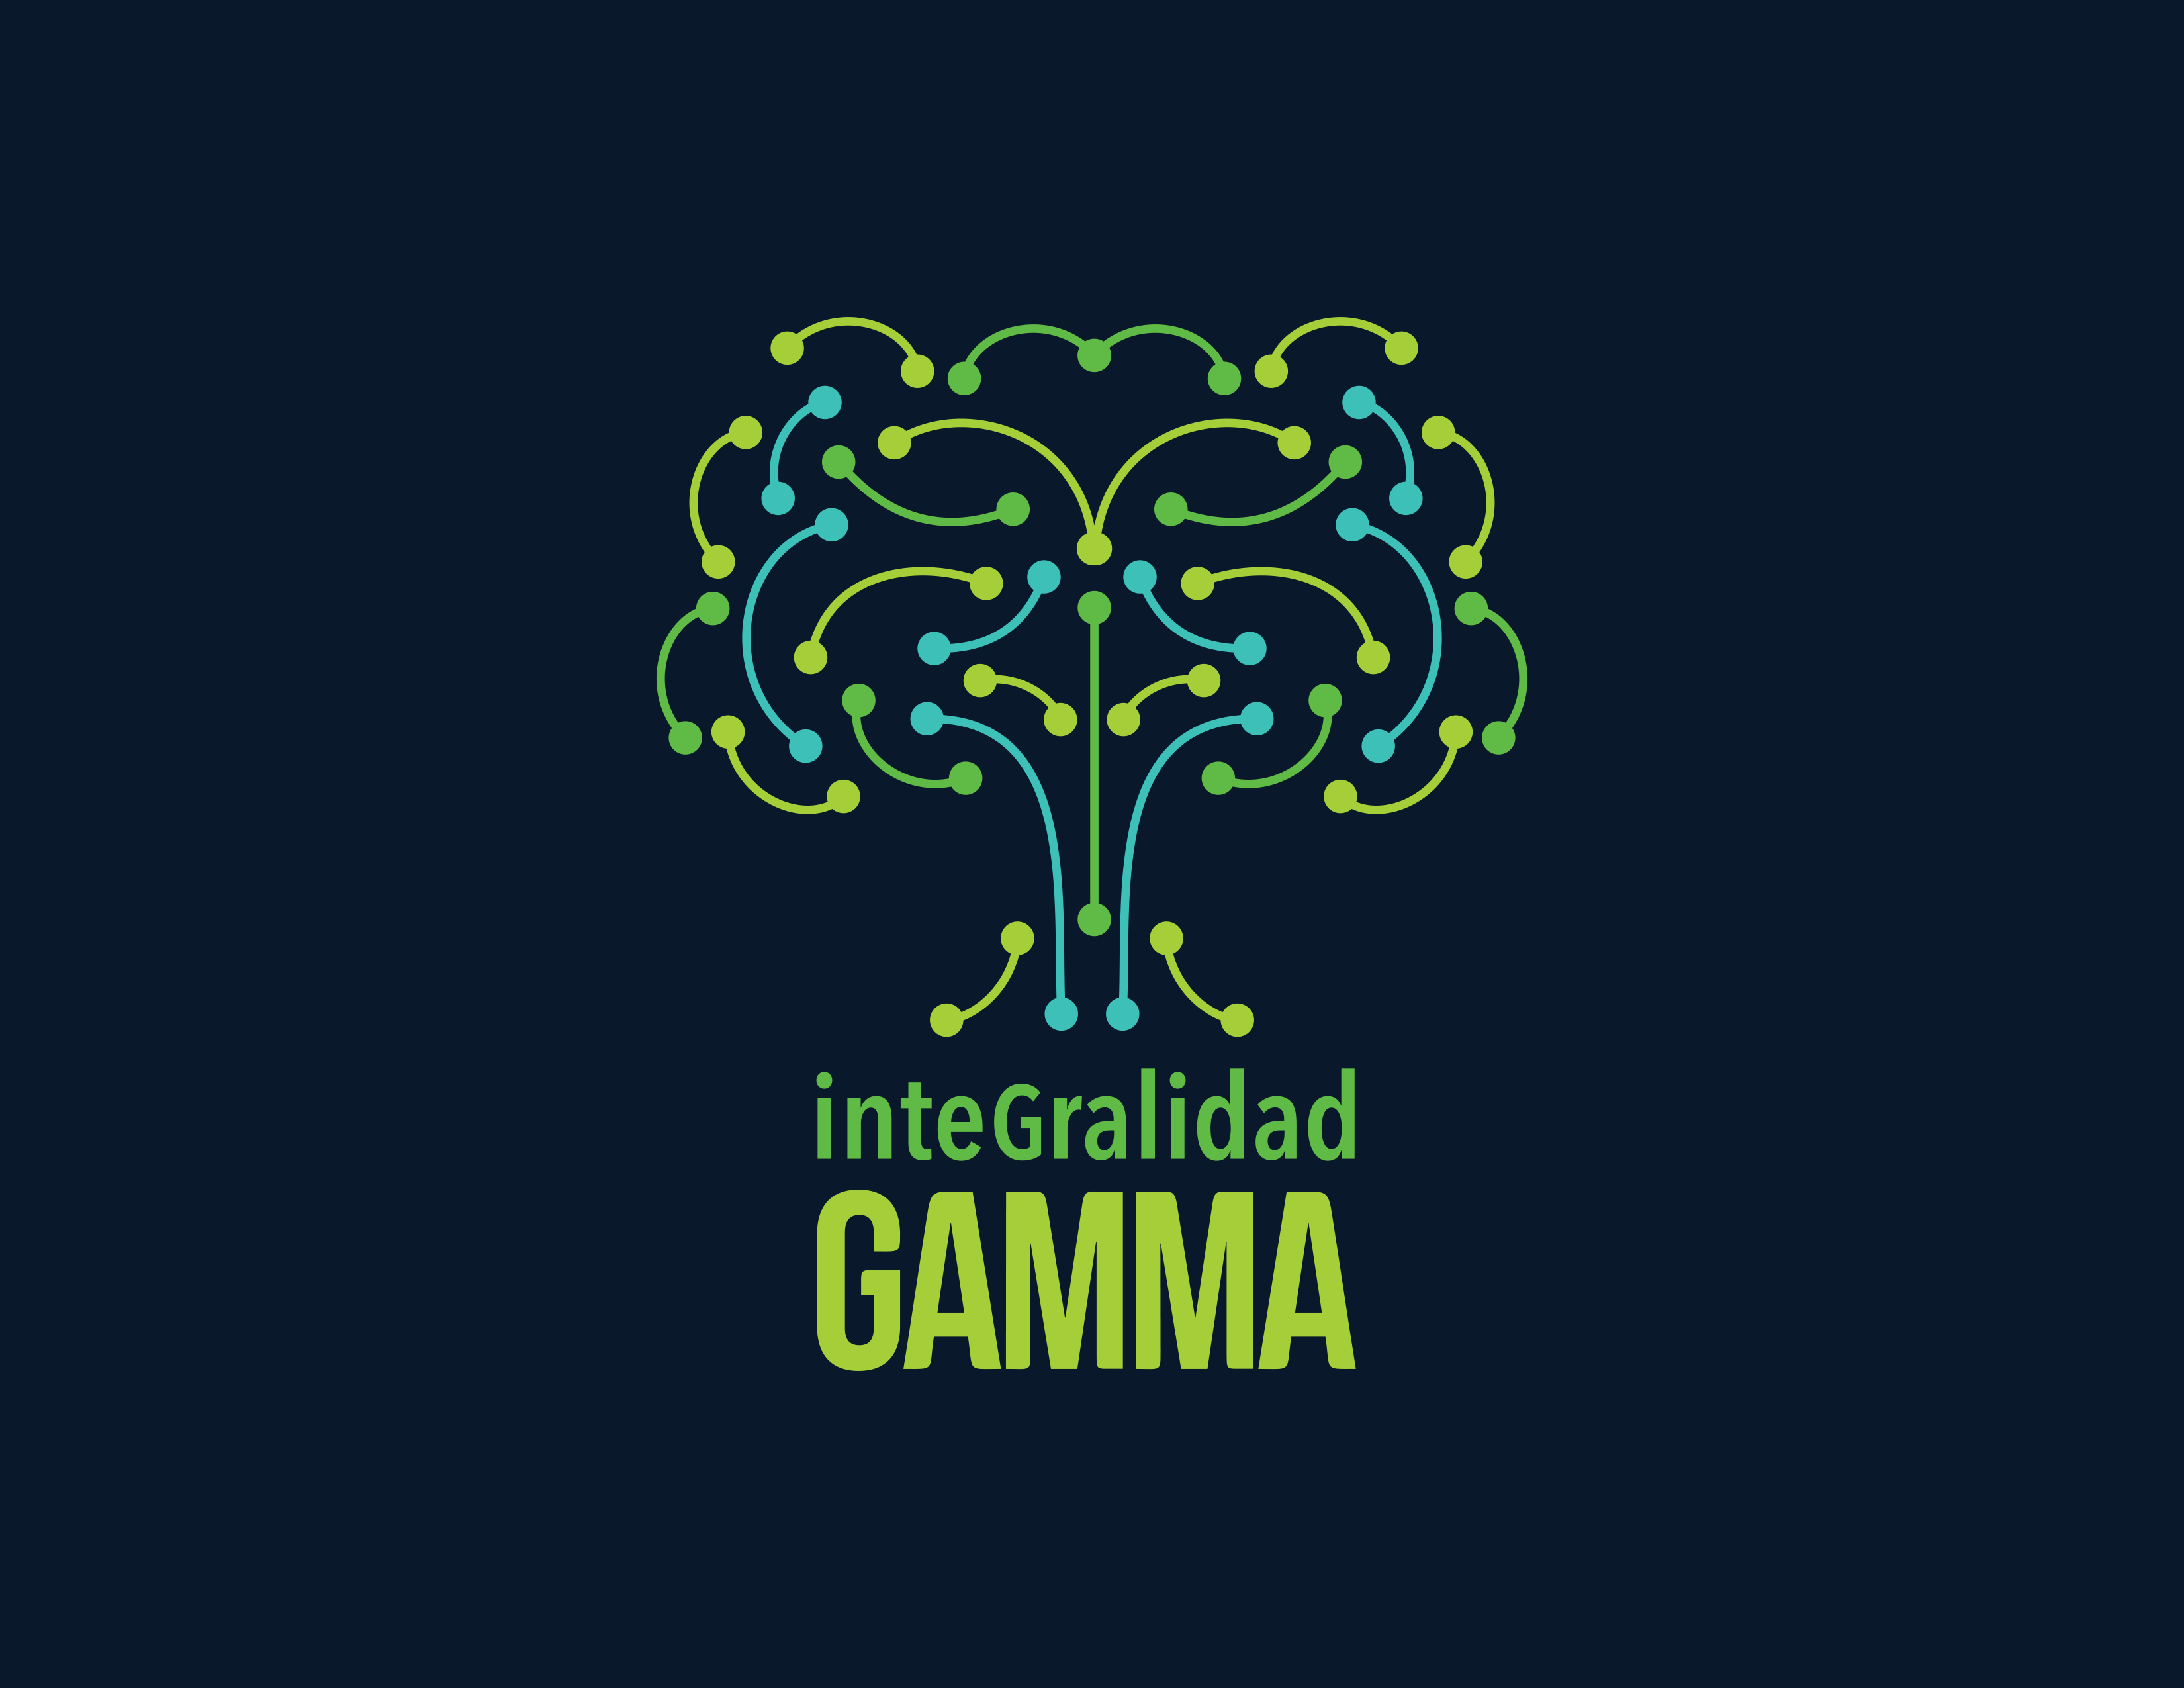 Integralidad Gamma